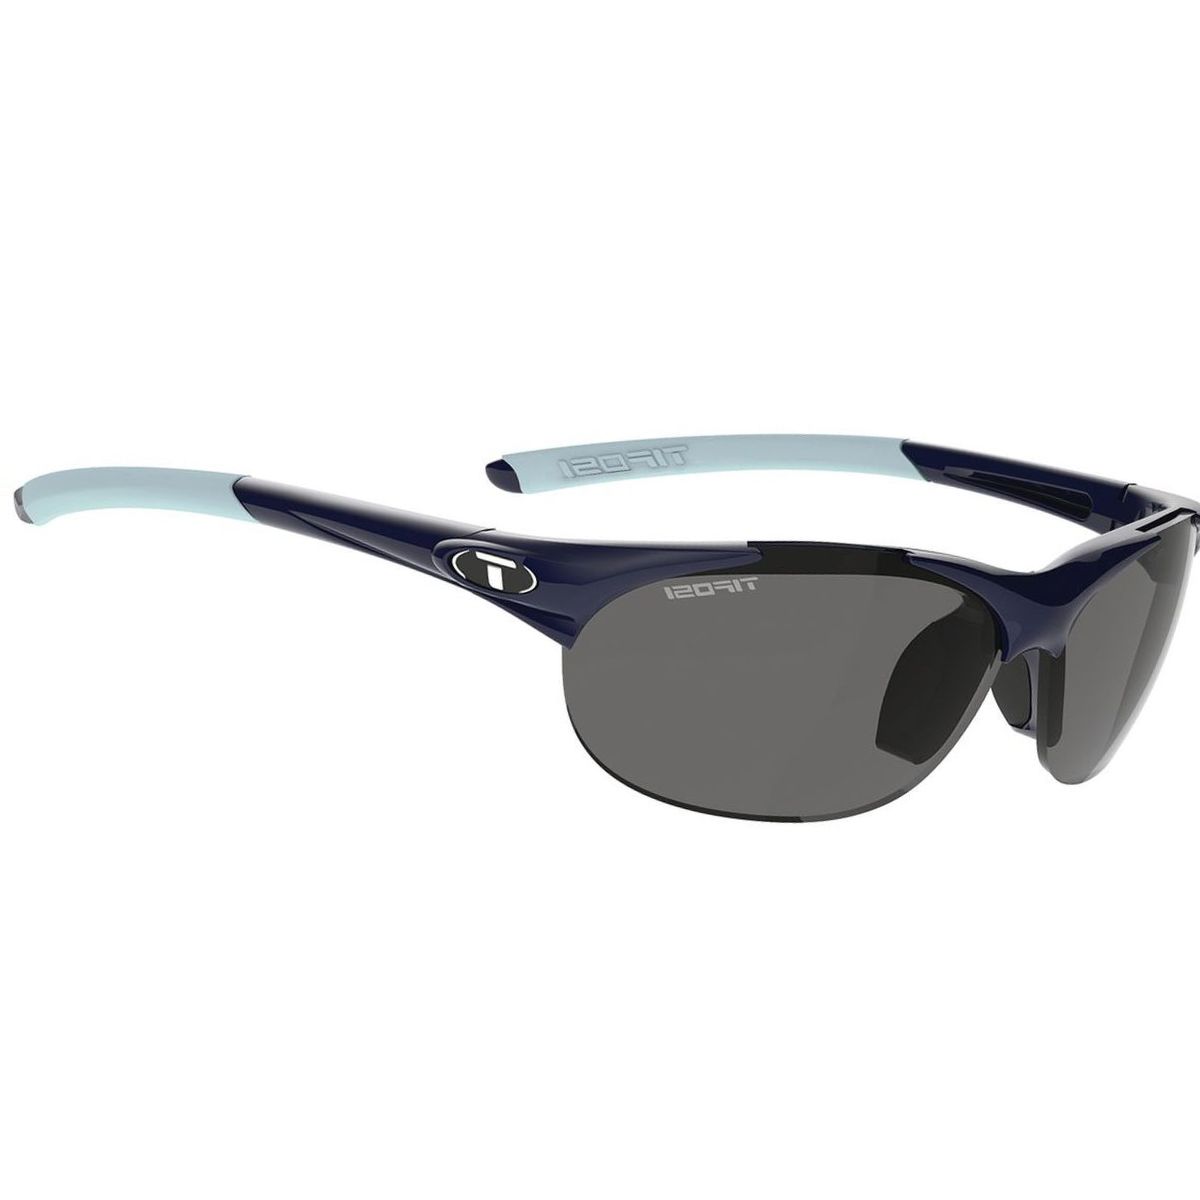 Tifosi Optics Wisp Sunglasses - Women's